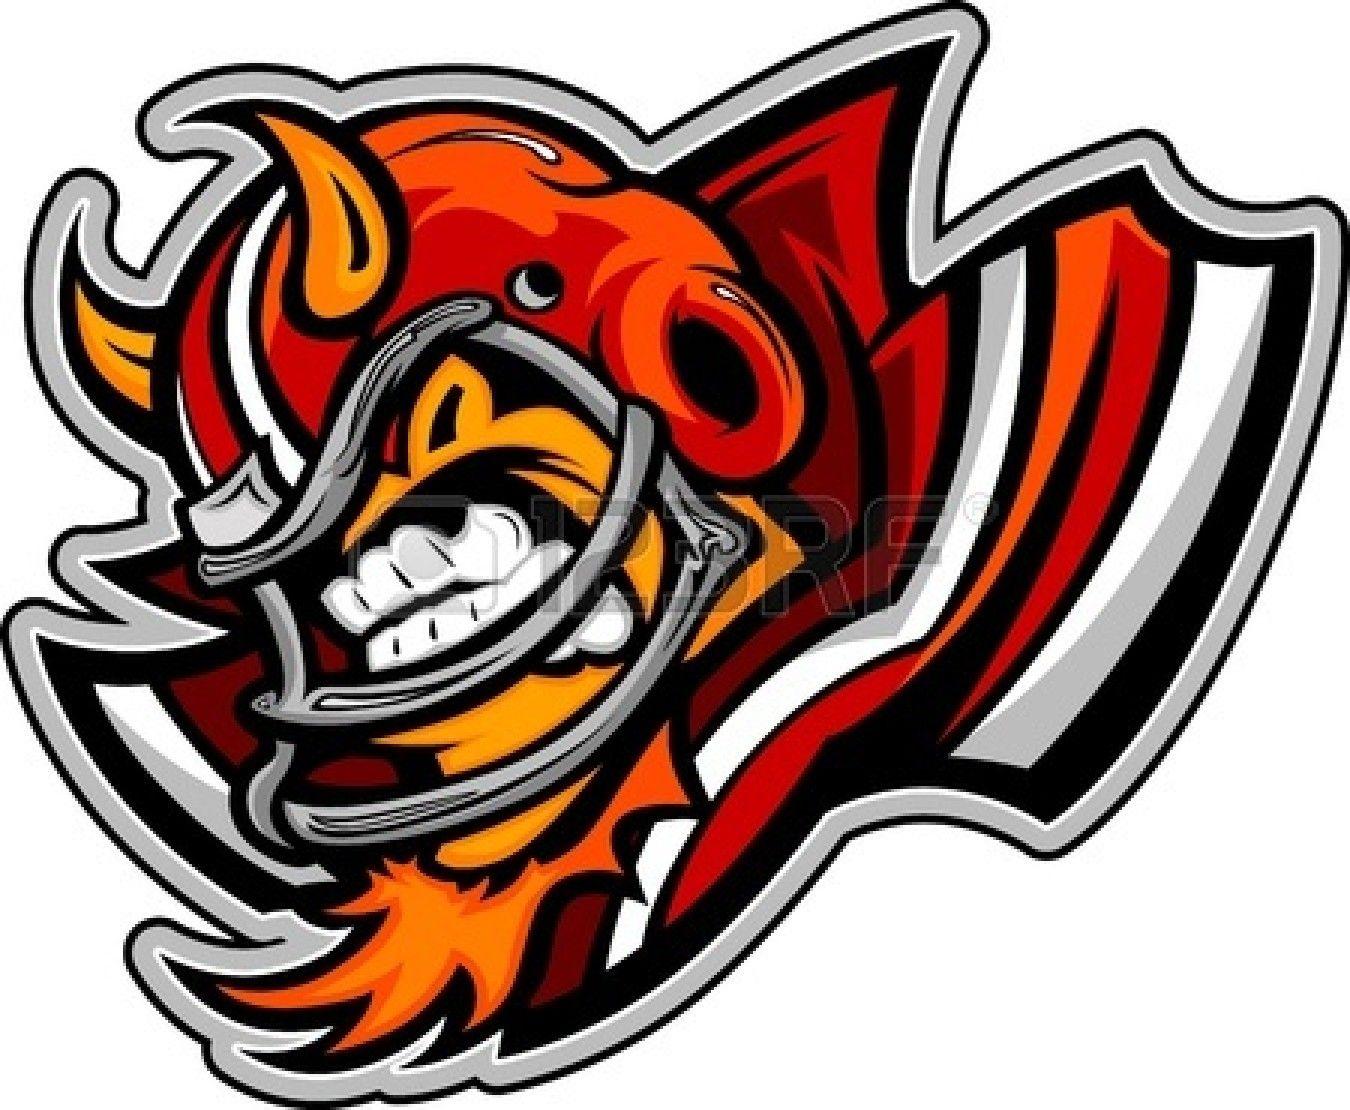 Cool Football Logo - Cool Football Helmet Logos | Clipart Panda - Free Clipart Images